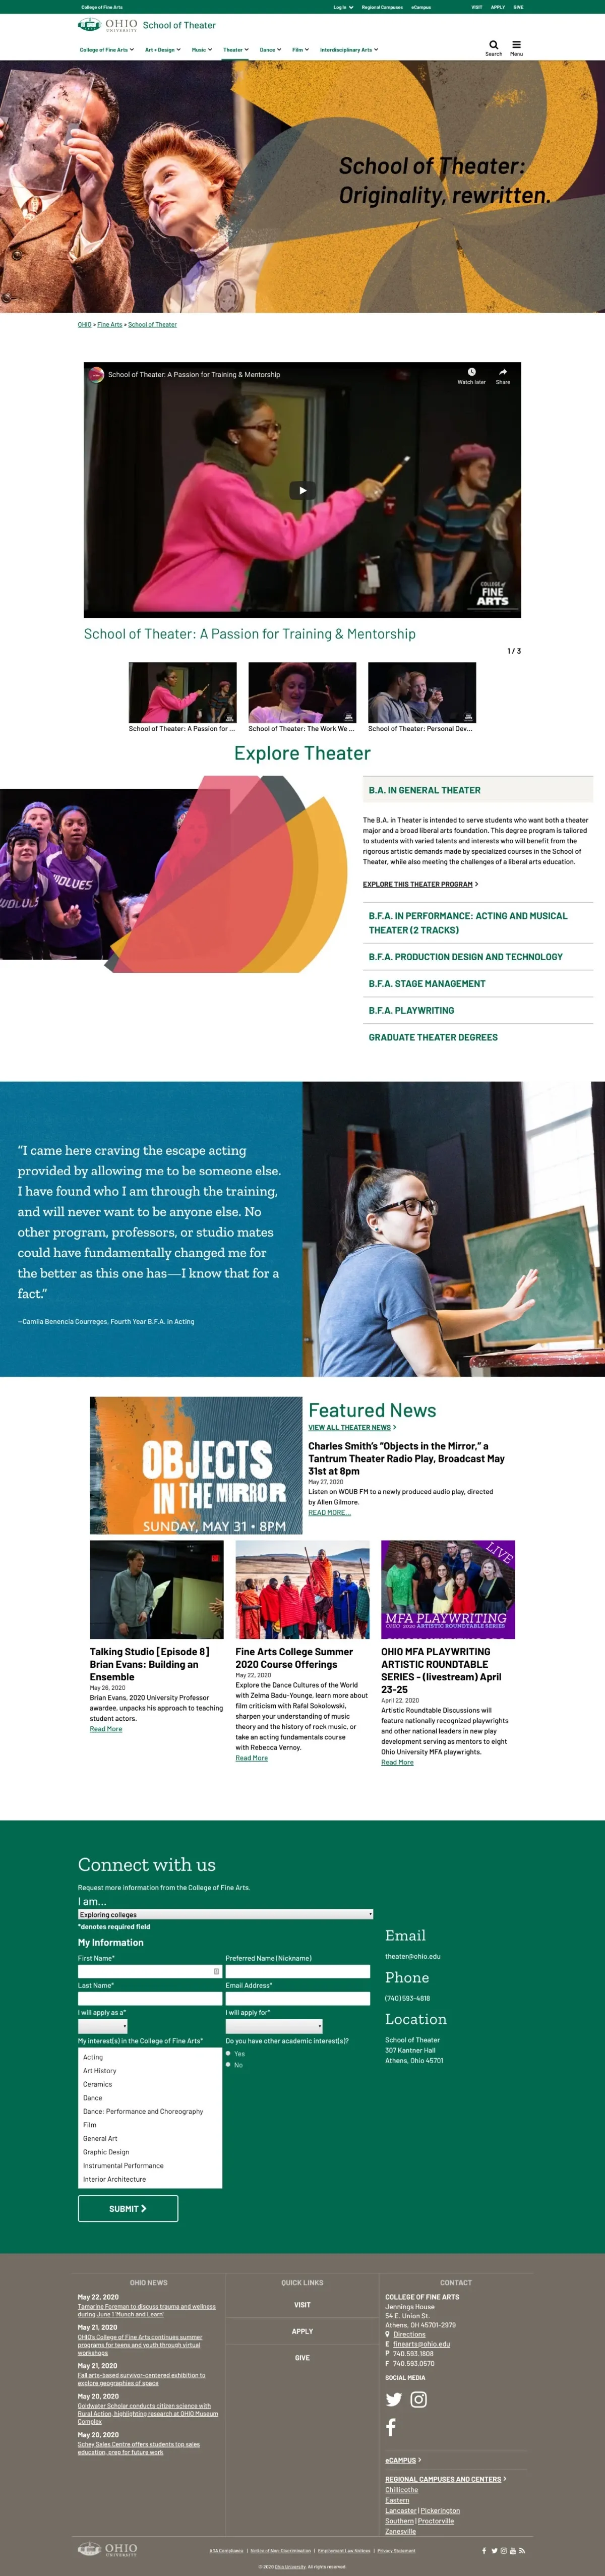 College of Fine Arts website